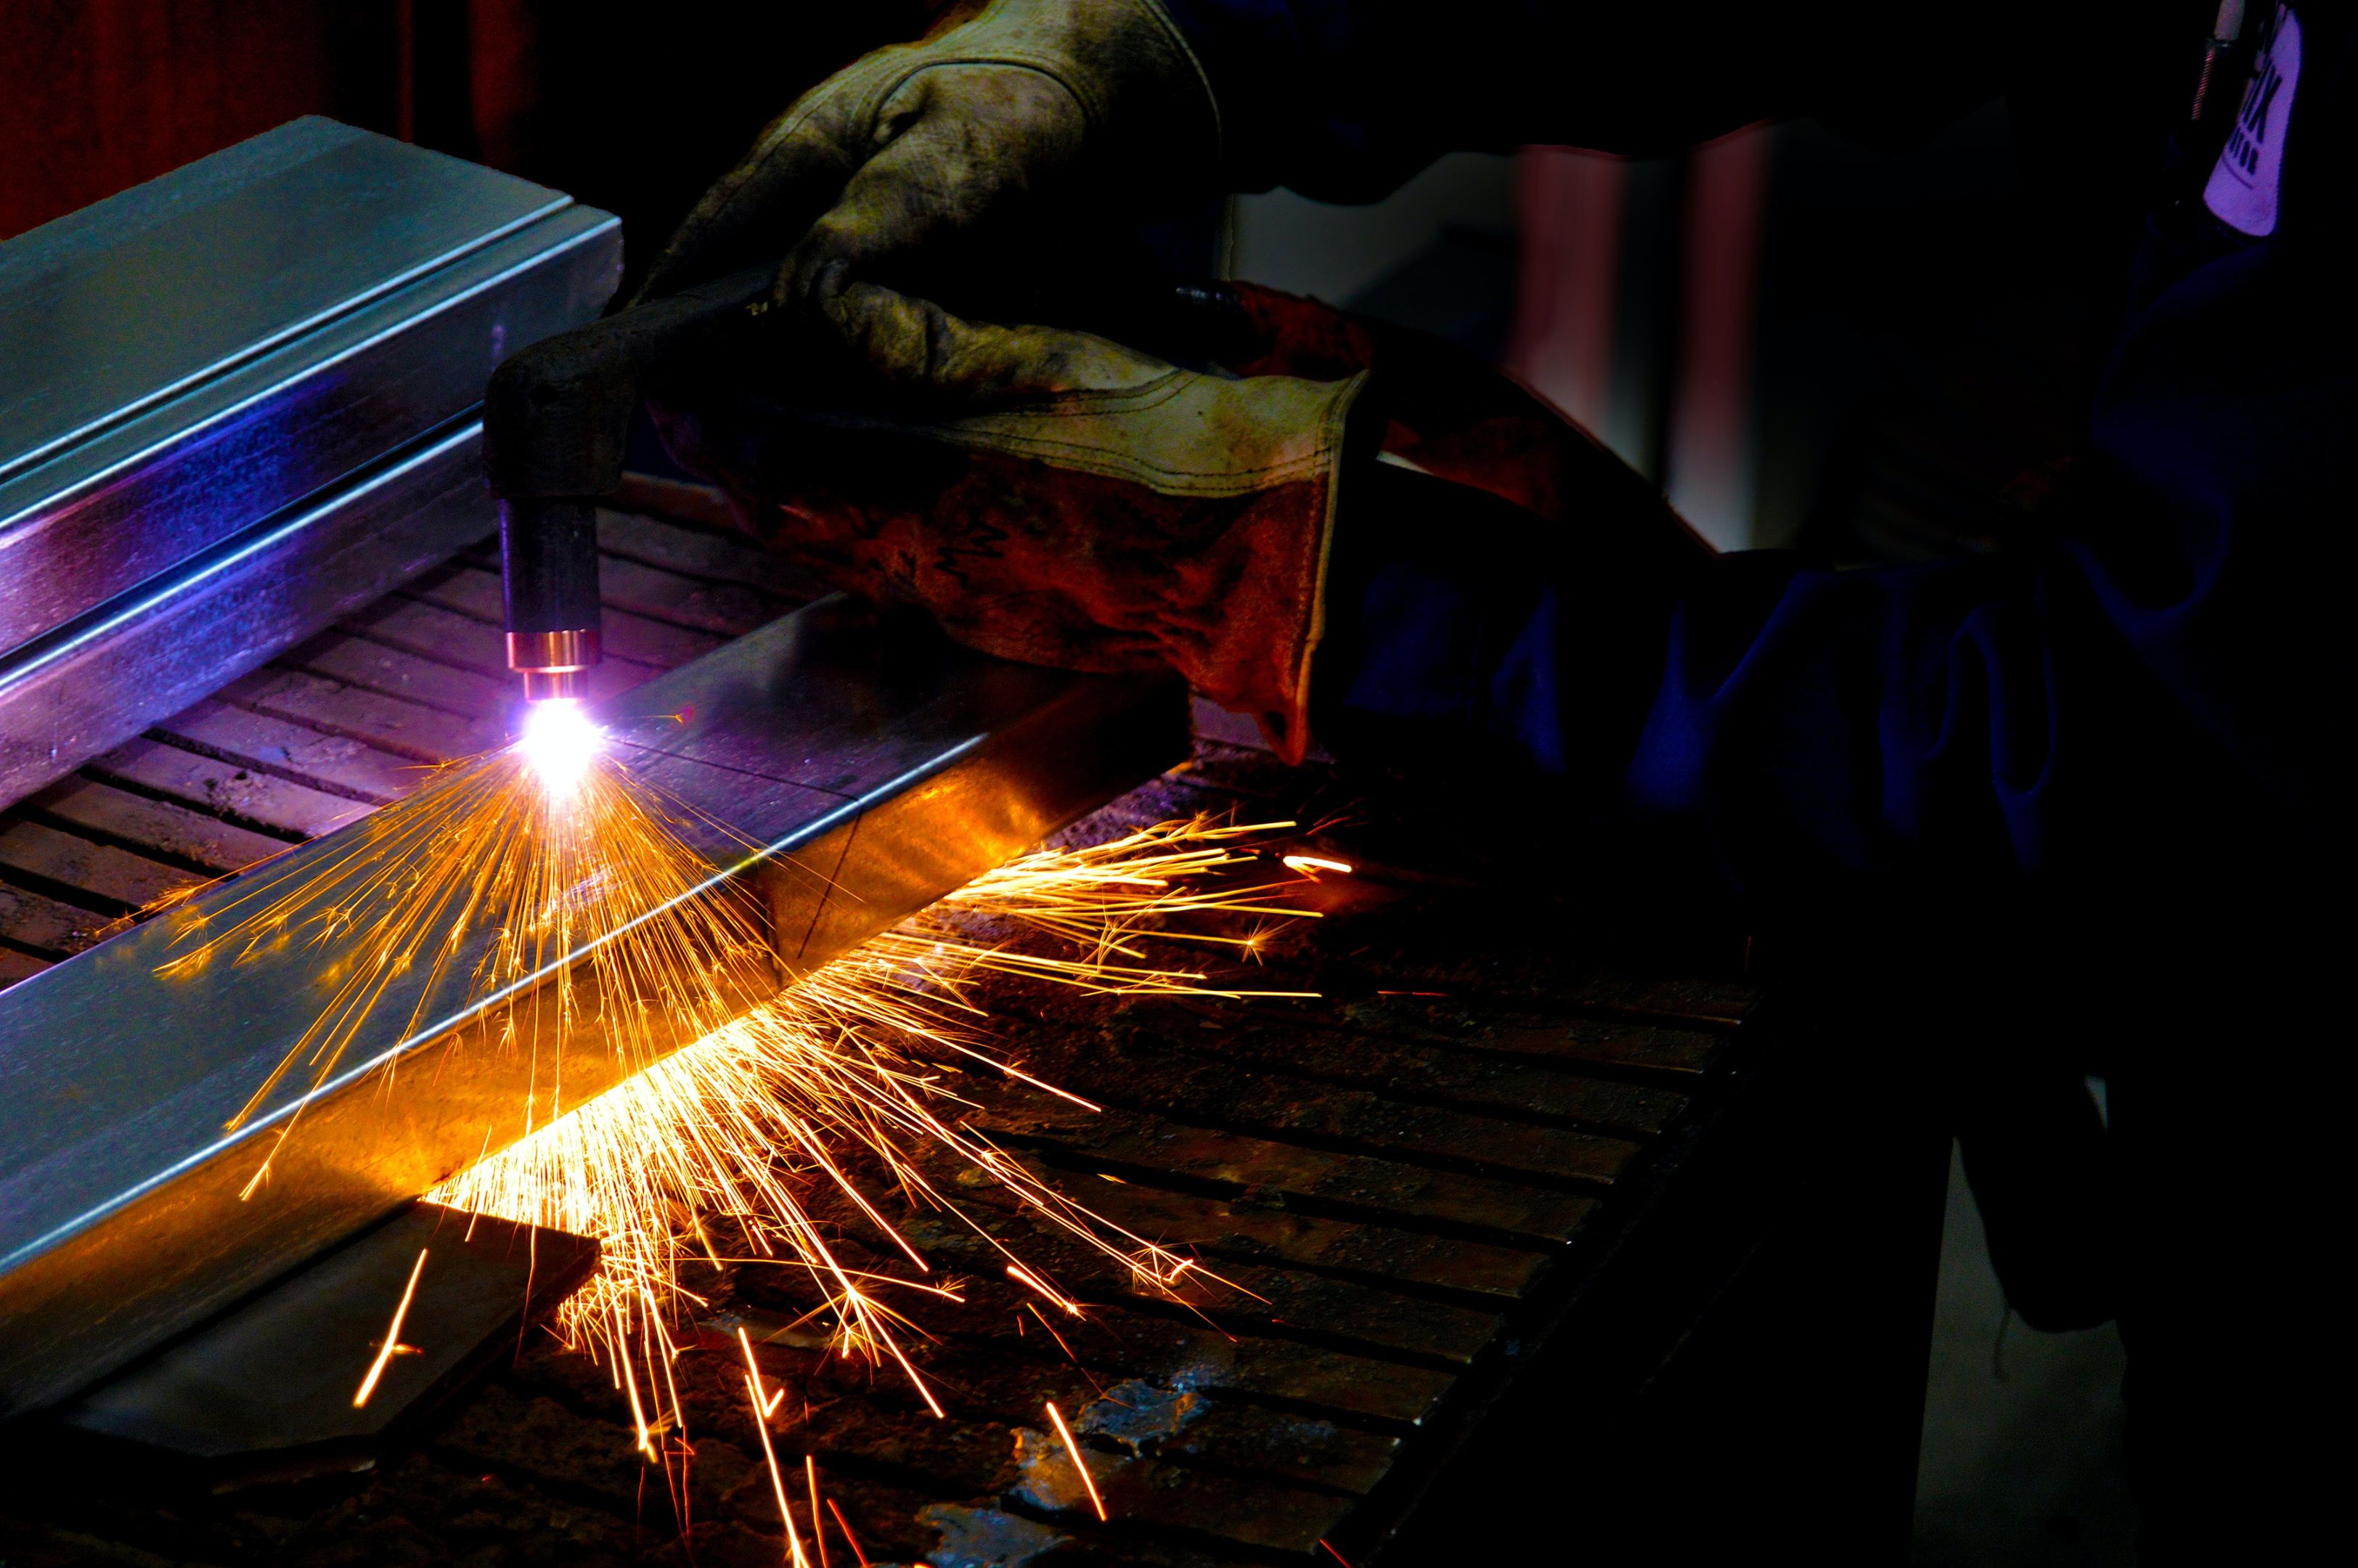 A welder at work, sparks fly